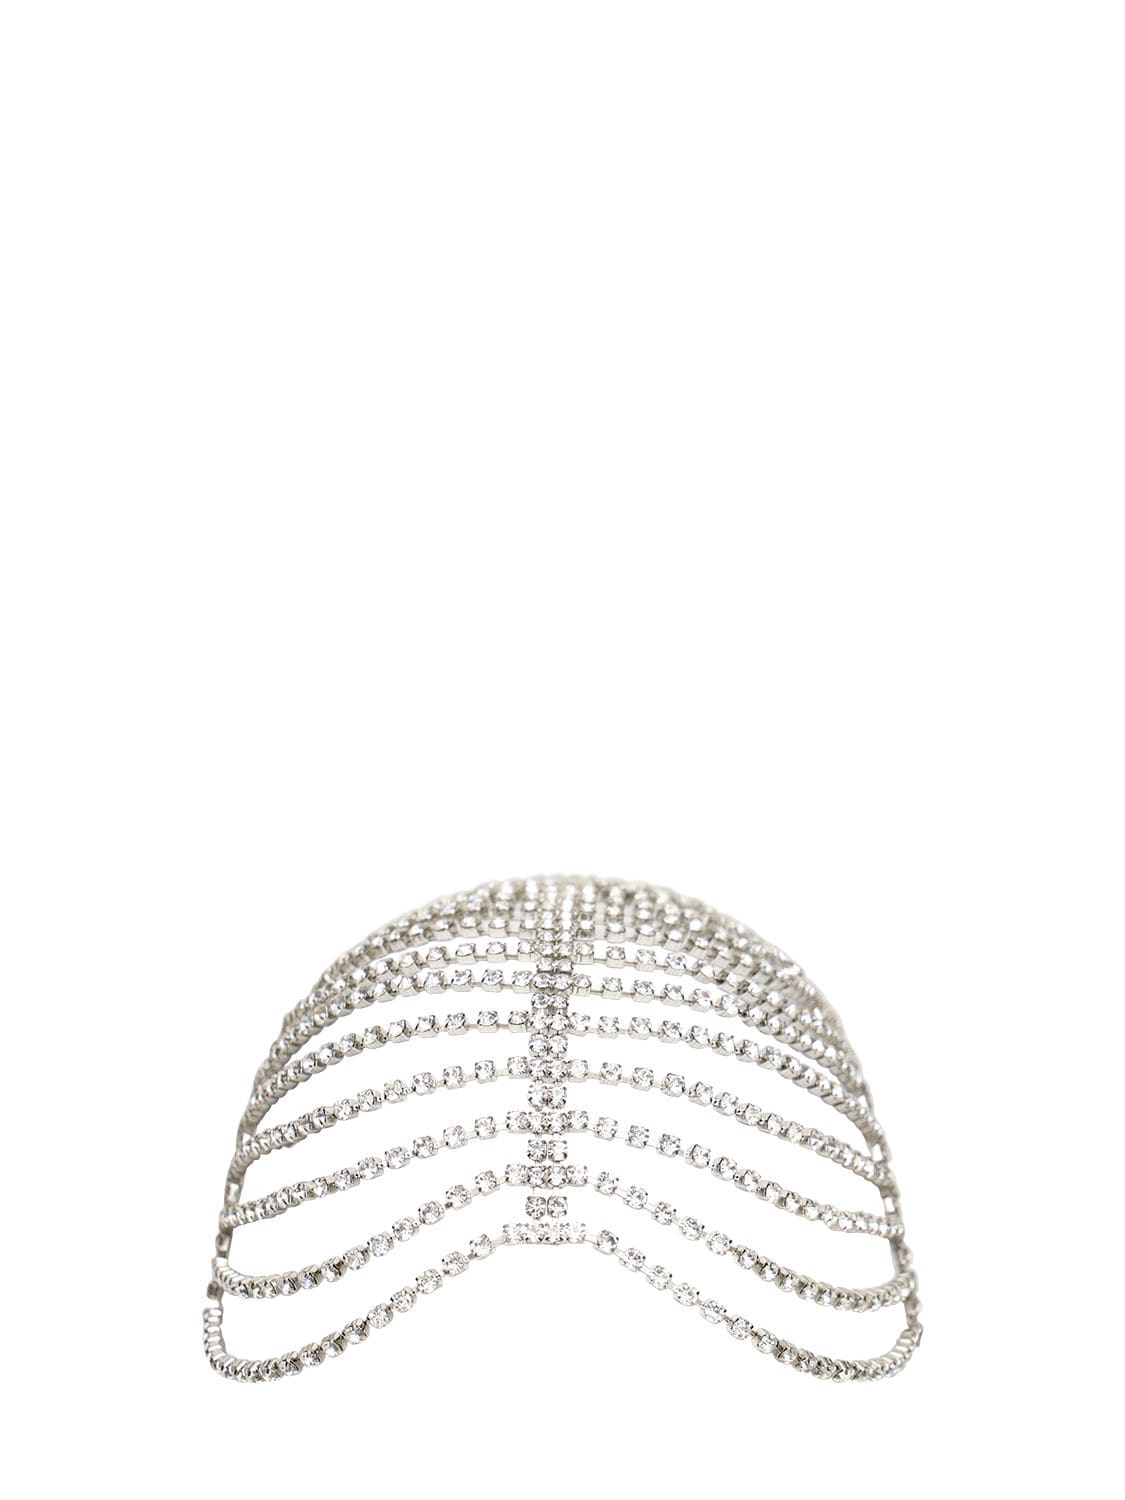 Area Draped Chandelier Crystal Headpiece